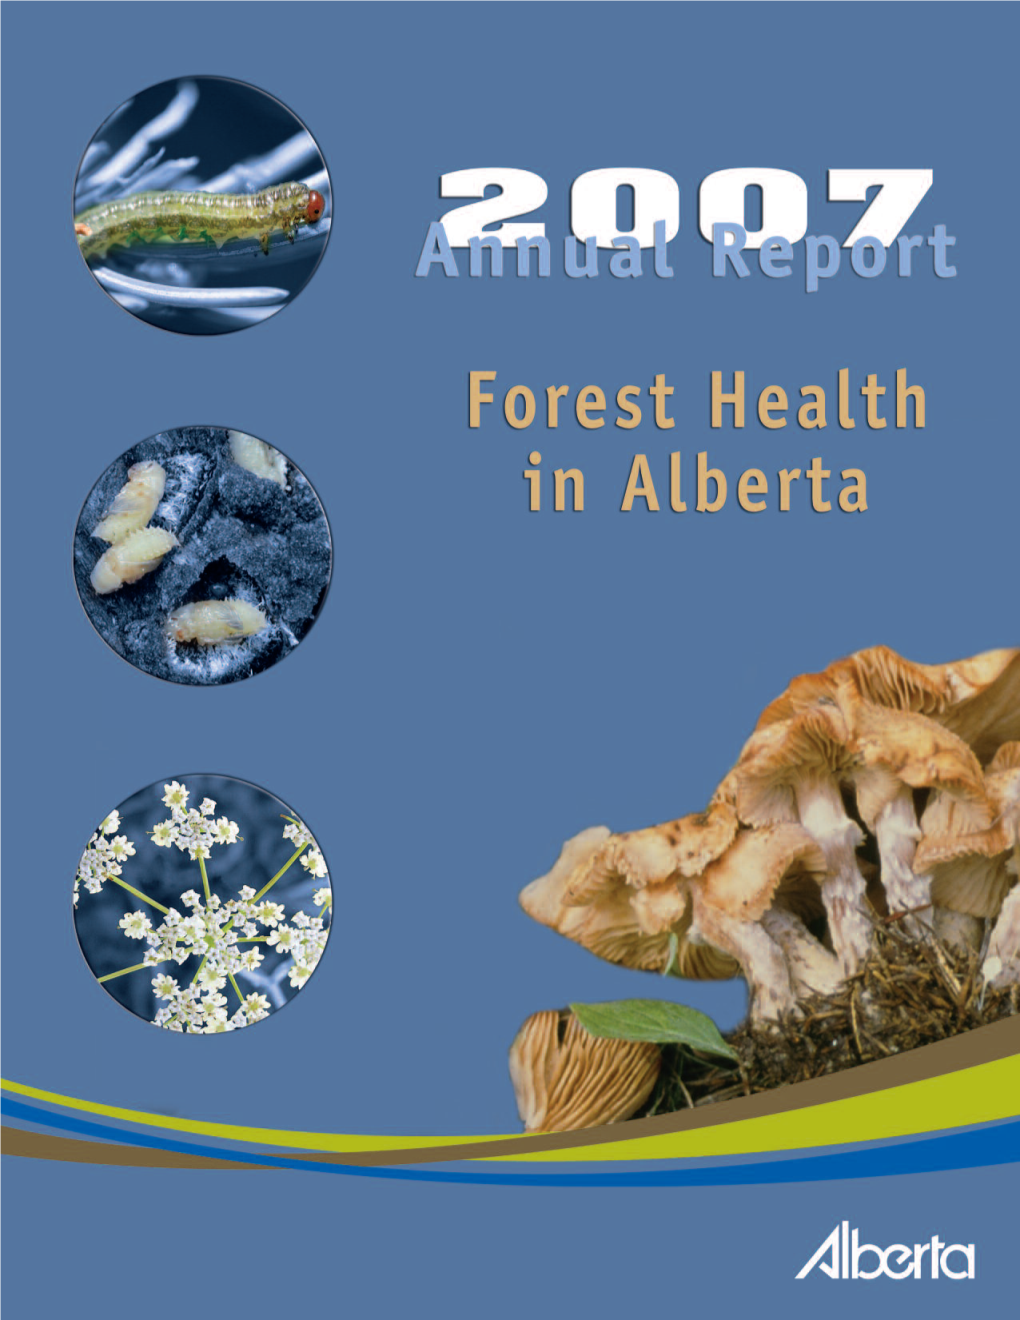 2007 Annual Report: Forest Health in Alberta